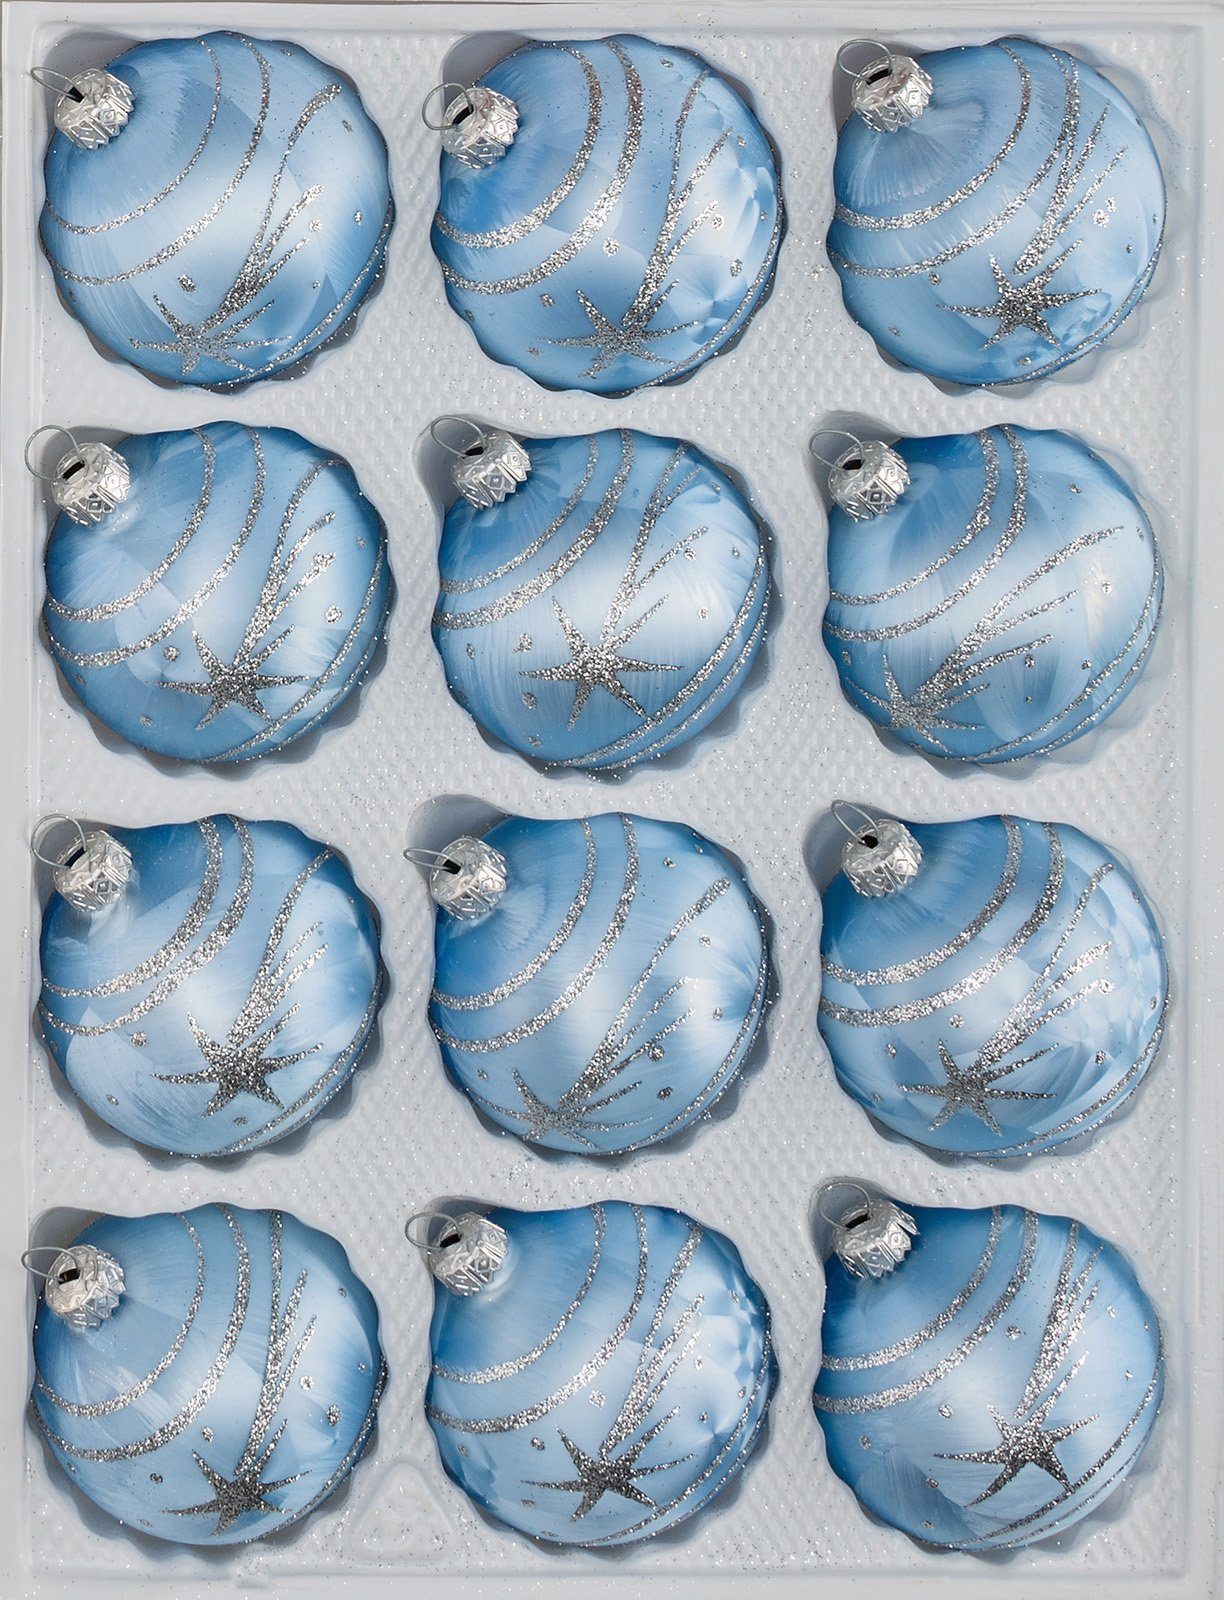 Navidacio Weihnachtsbaumkugel 12 tlg. Glas-Weihnachtskugeln Set in Ice Blau Silber Komet